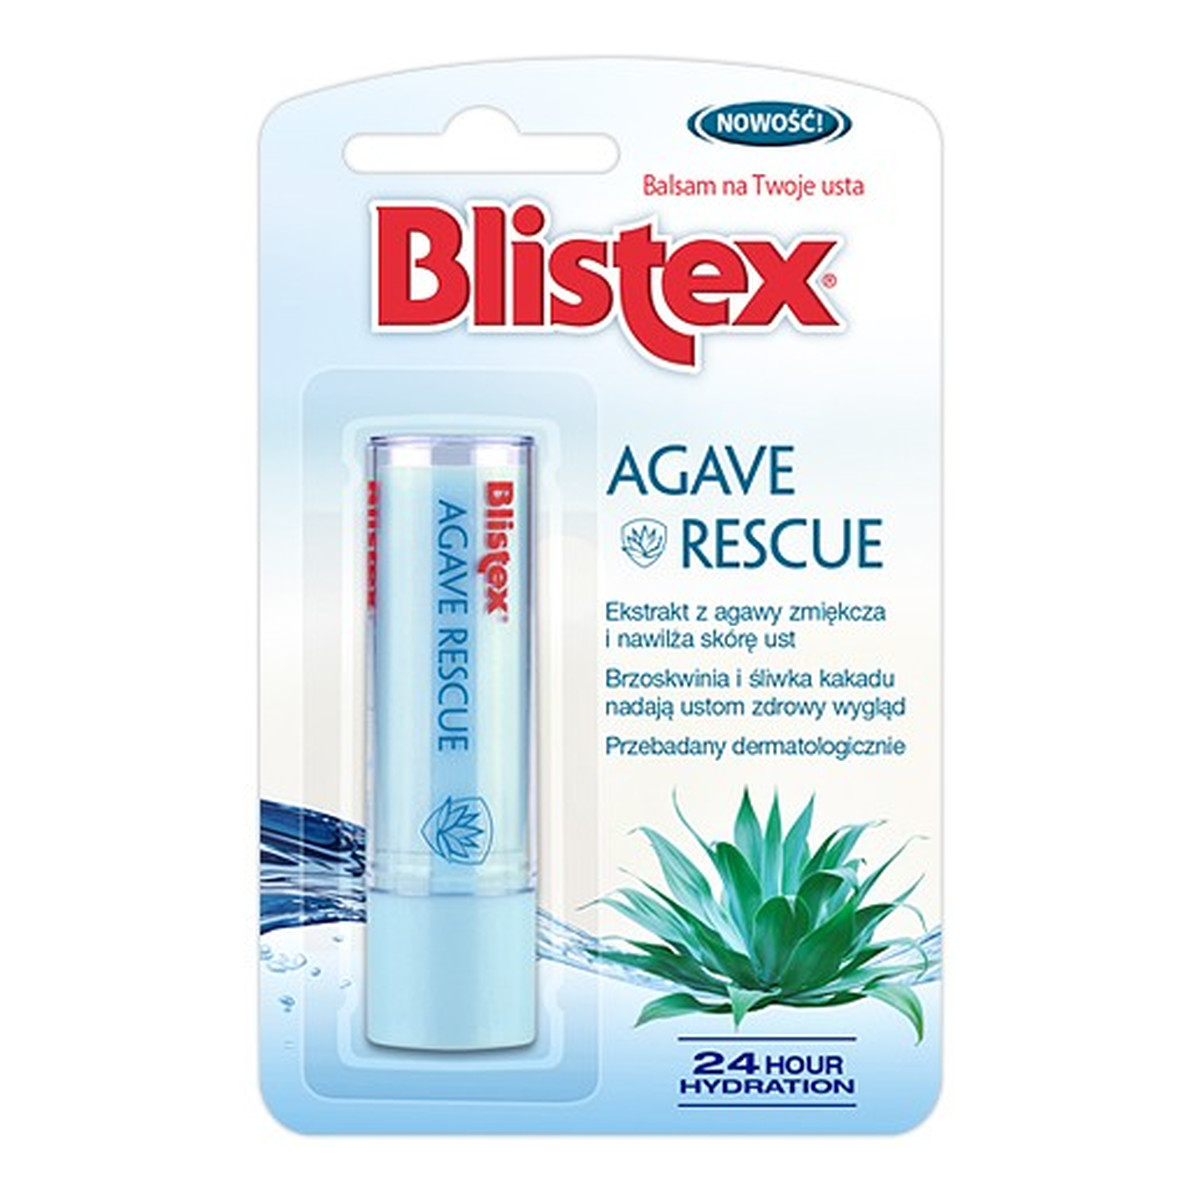 Blistex Balsam do ust Agave Rescue 4g